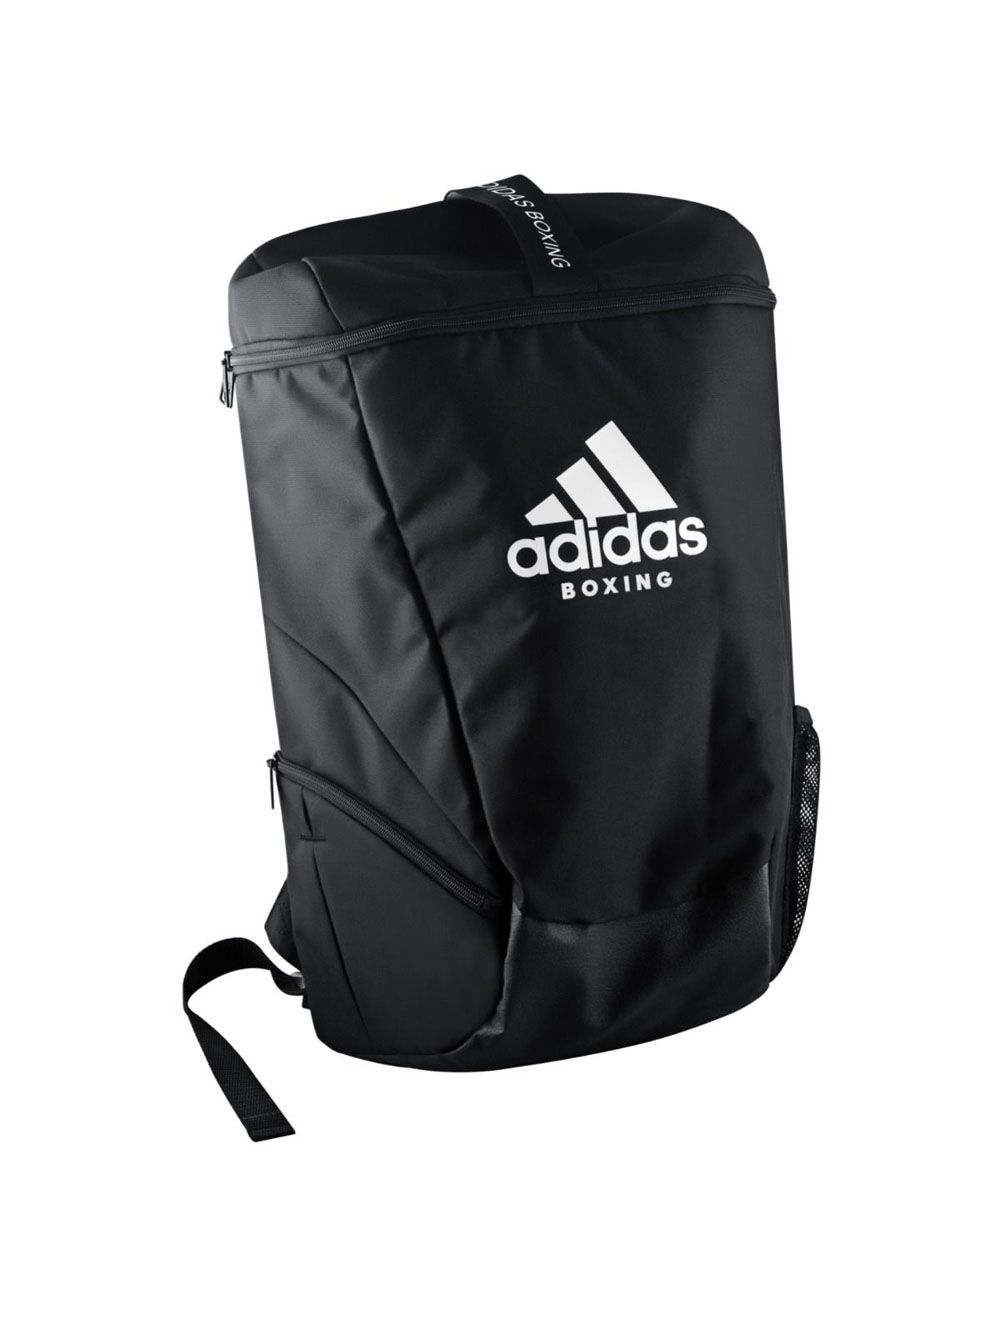 Adidas Boxing Backpack